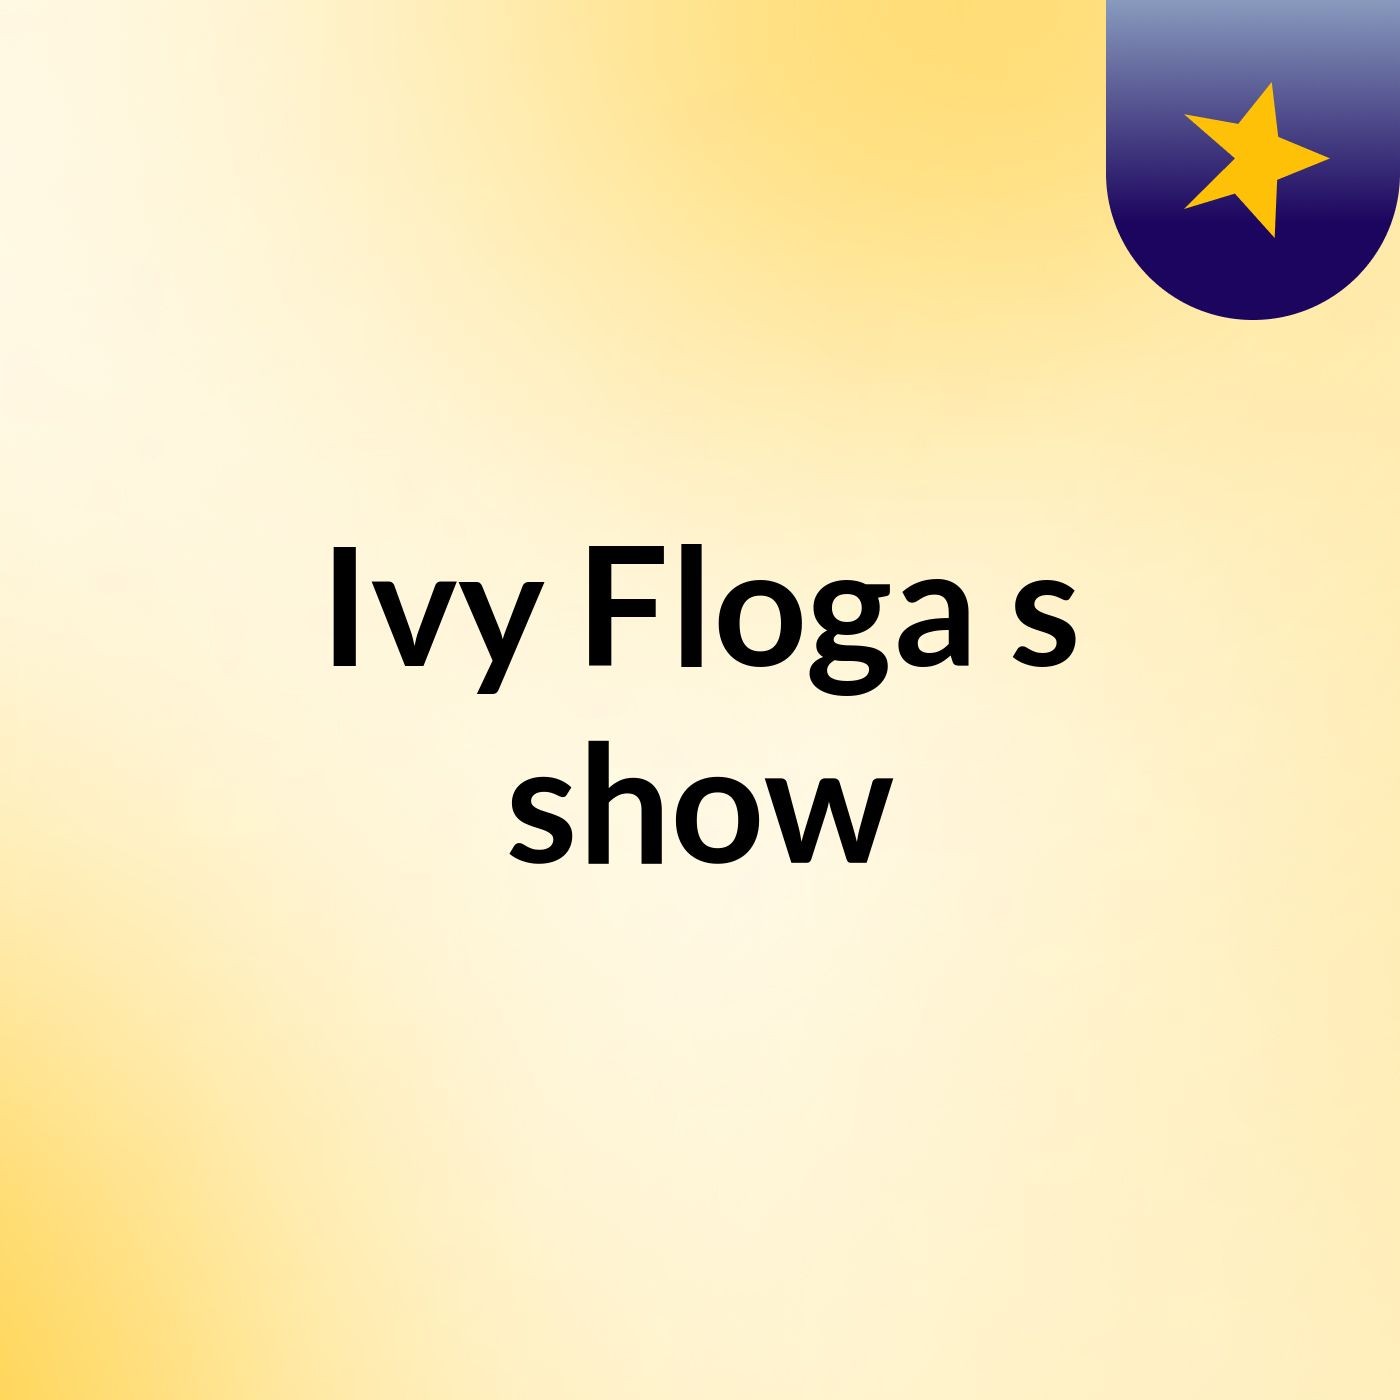 Ivy Floga's show